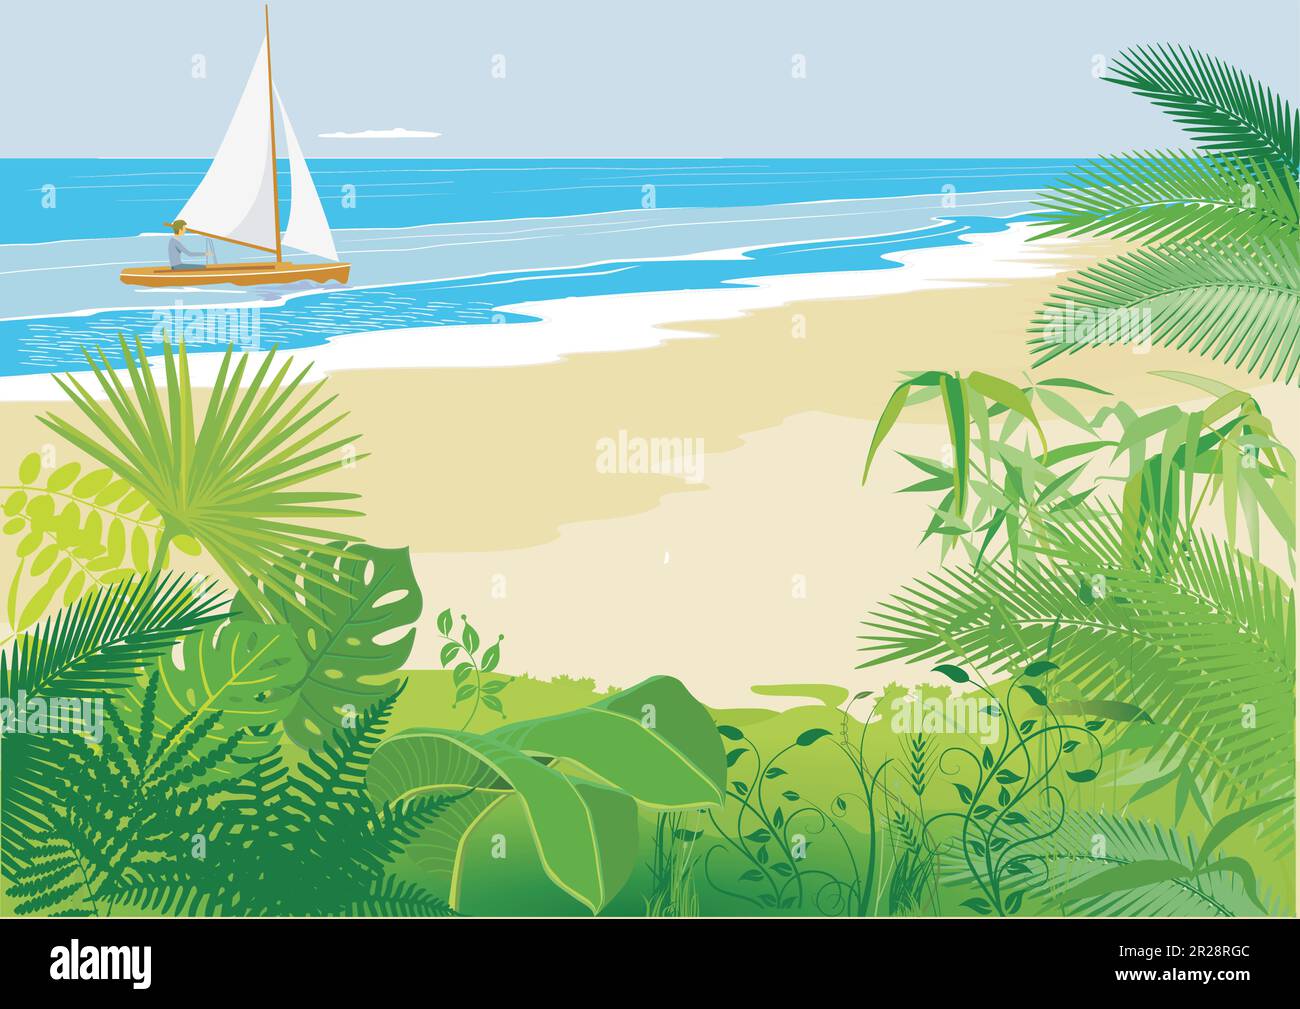 Strand mit Segelschiff und Palmen - Illustration Stock Vektor